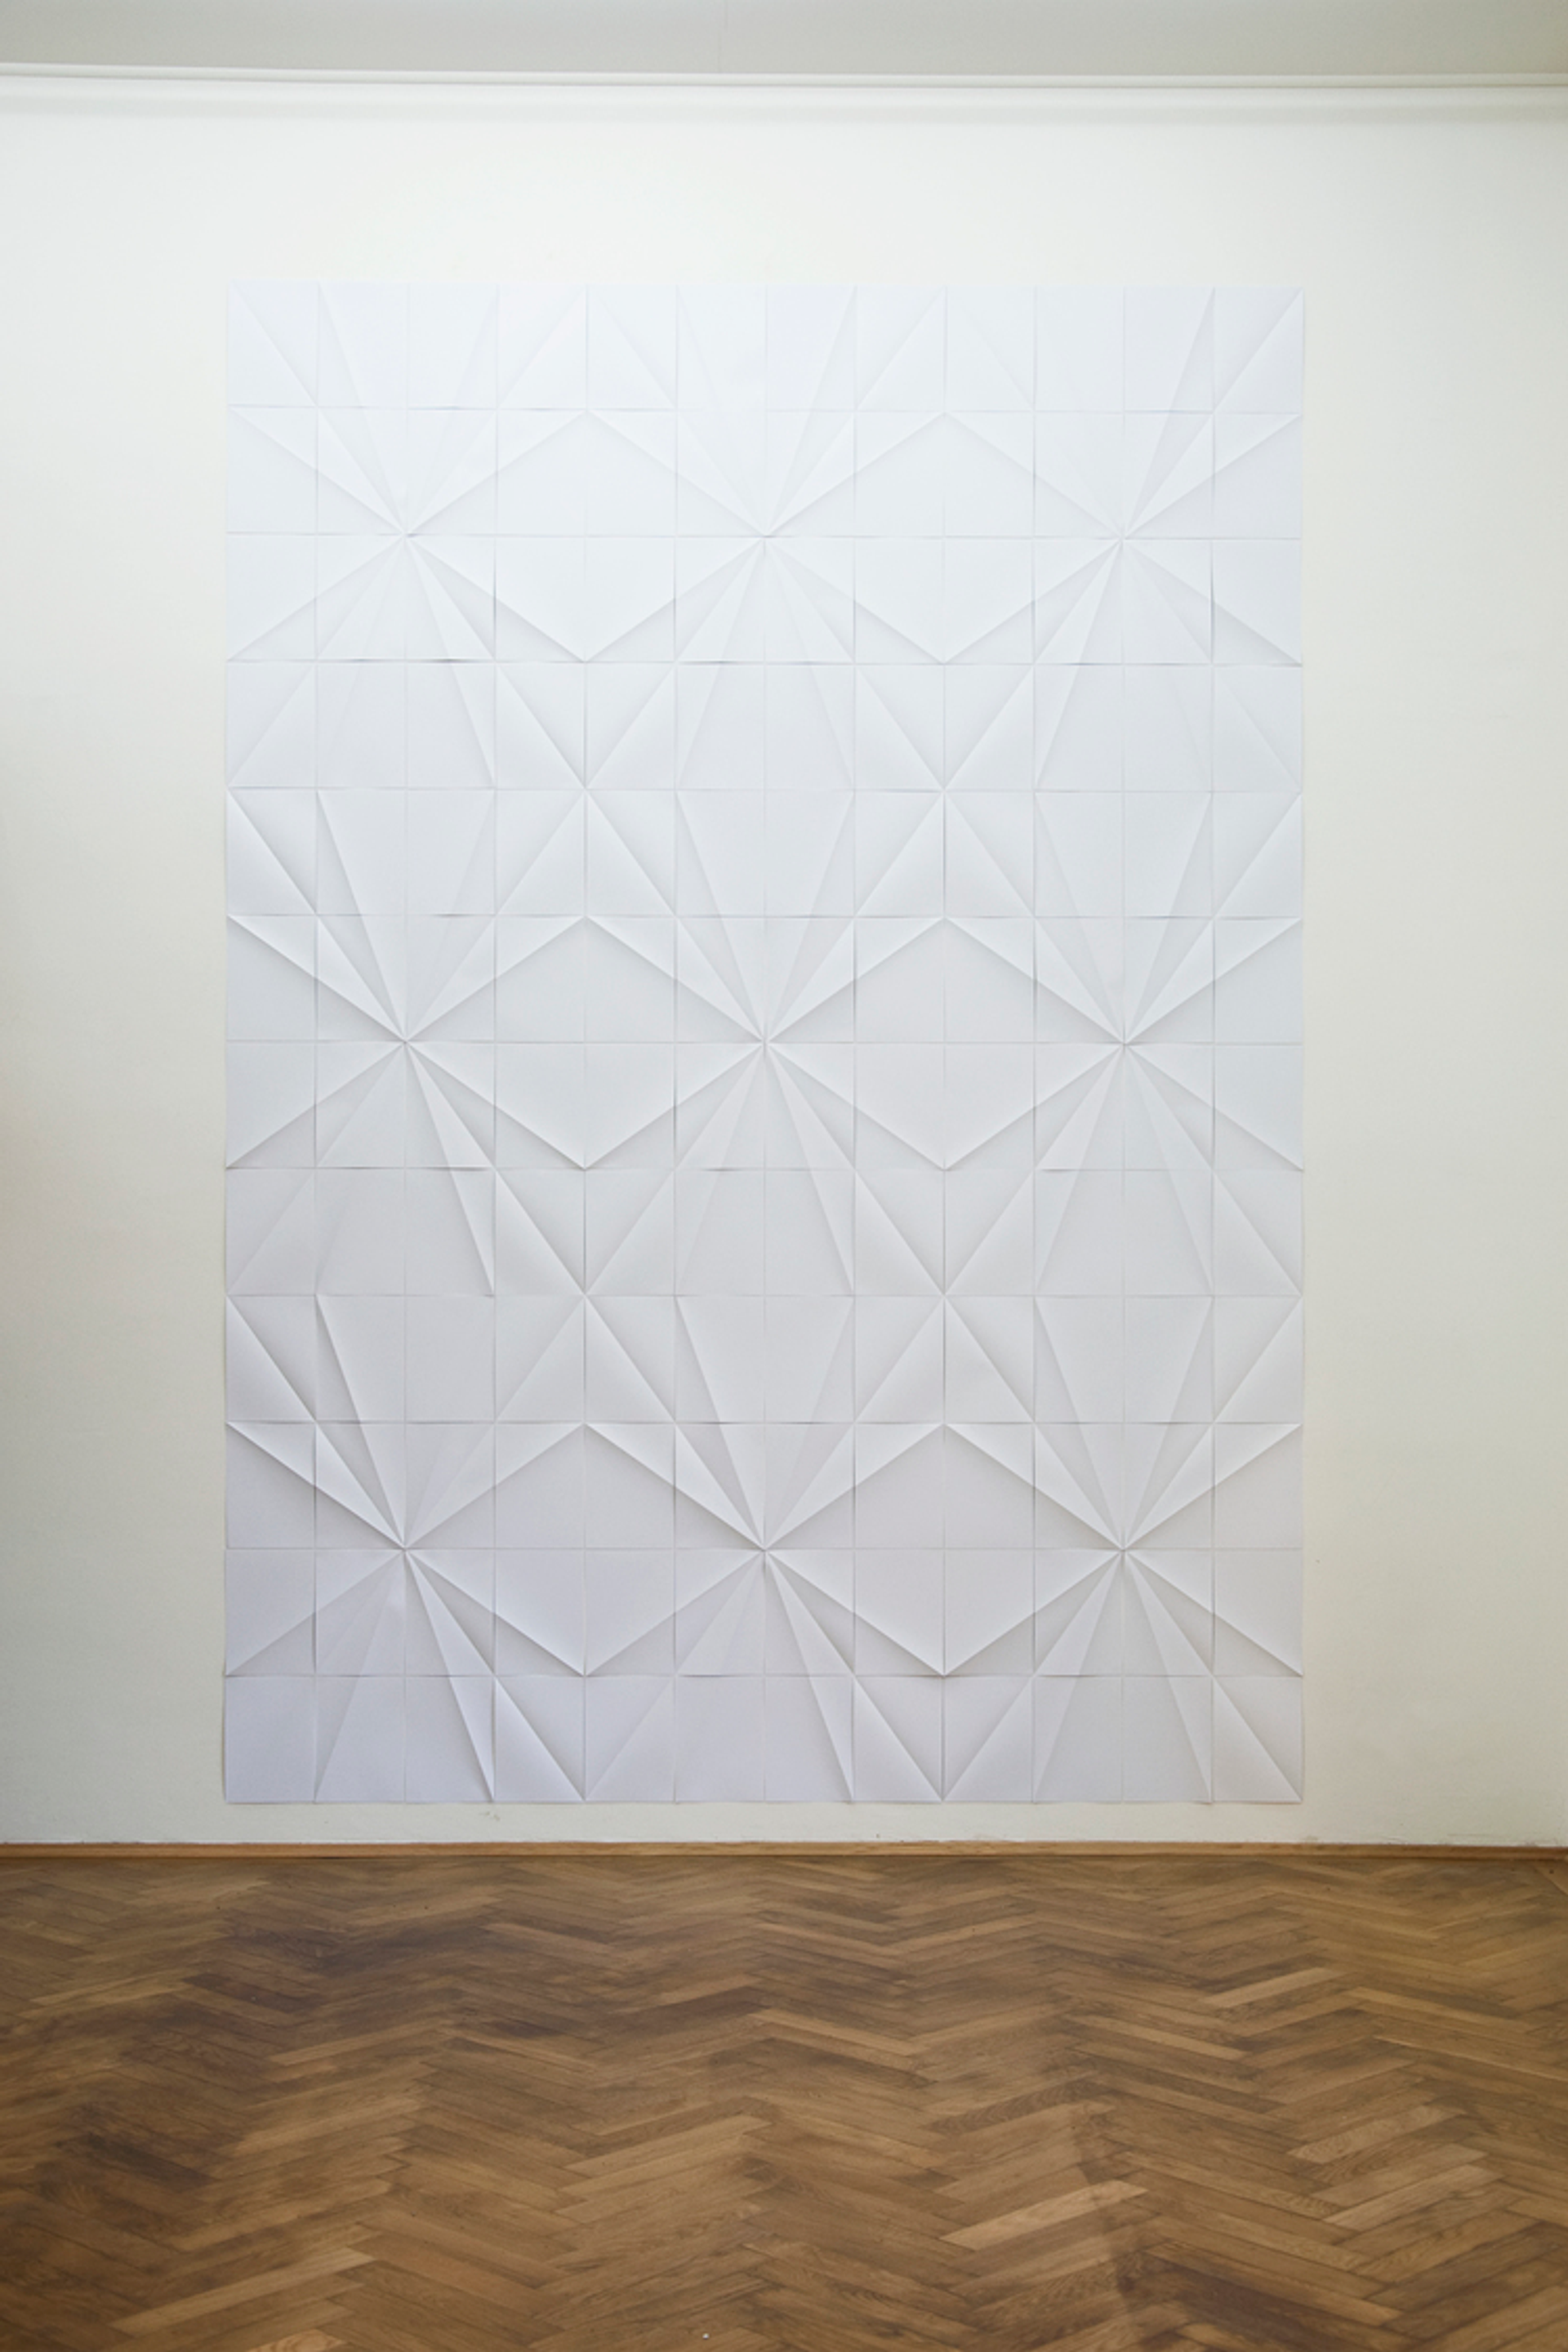 Ignacio Uriarte, Stars, 2014
Paper installation 
144 sheets of paper, each 29,7 × 21cm